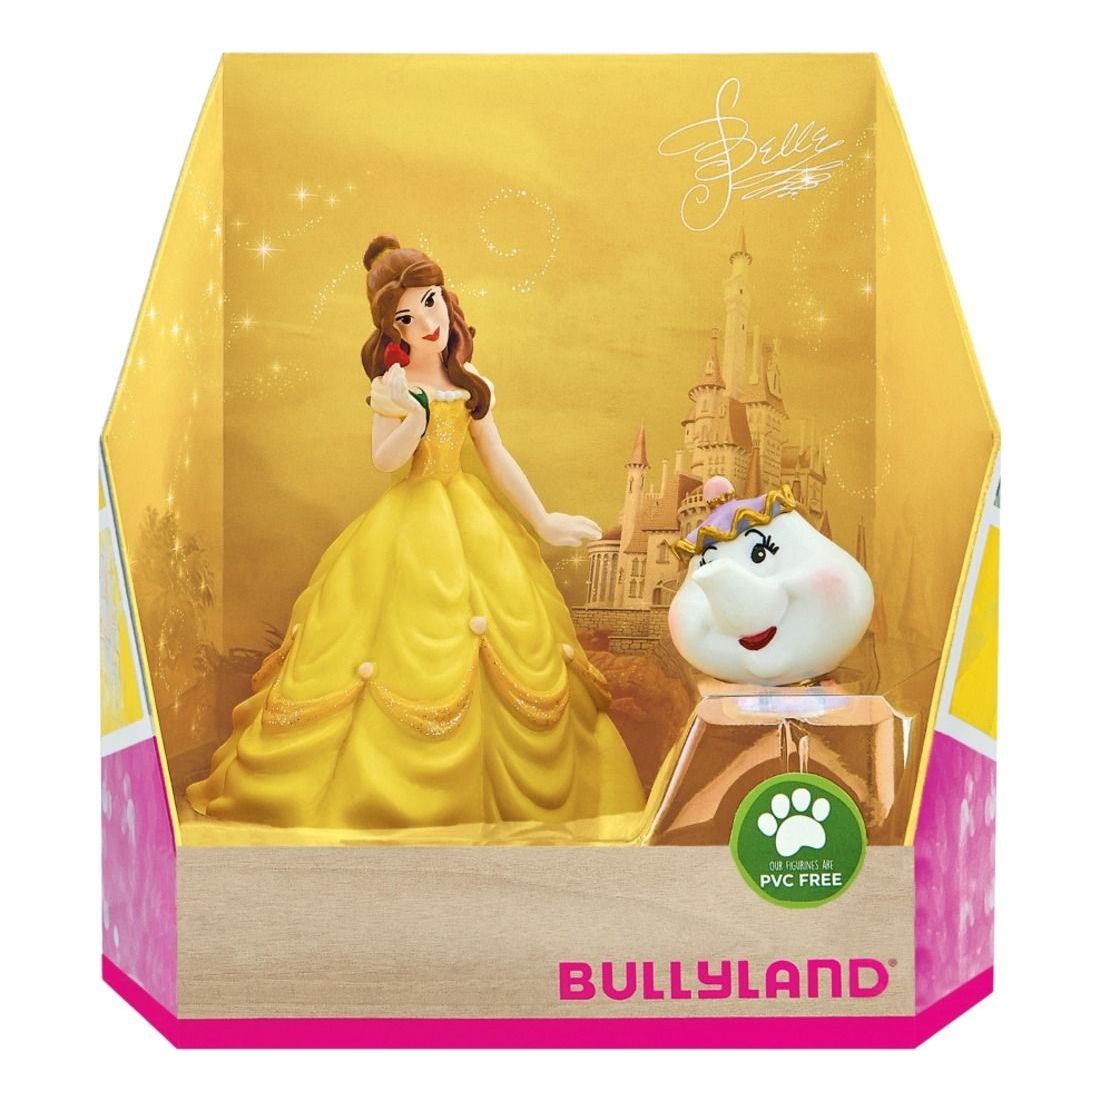 Bullyland - Disney Princess Belle Double Pack Mini Figures Bullyland